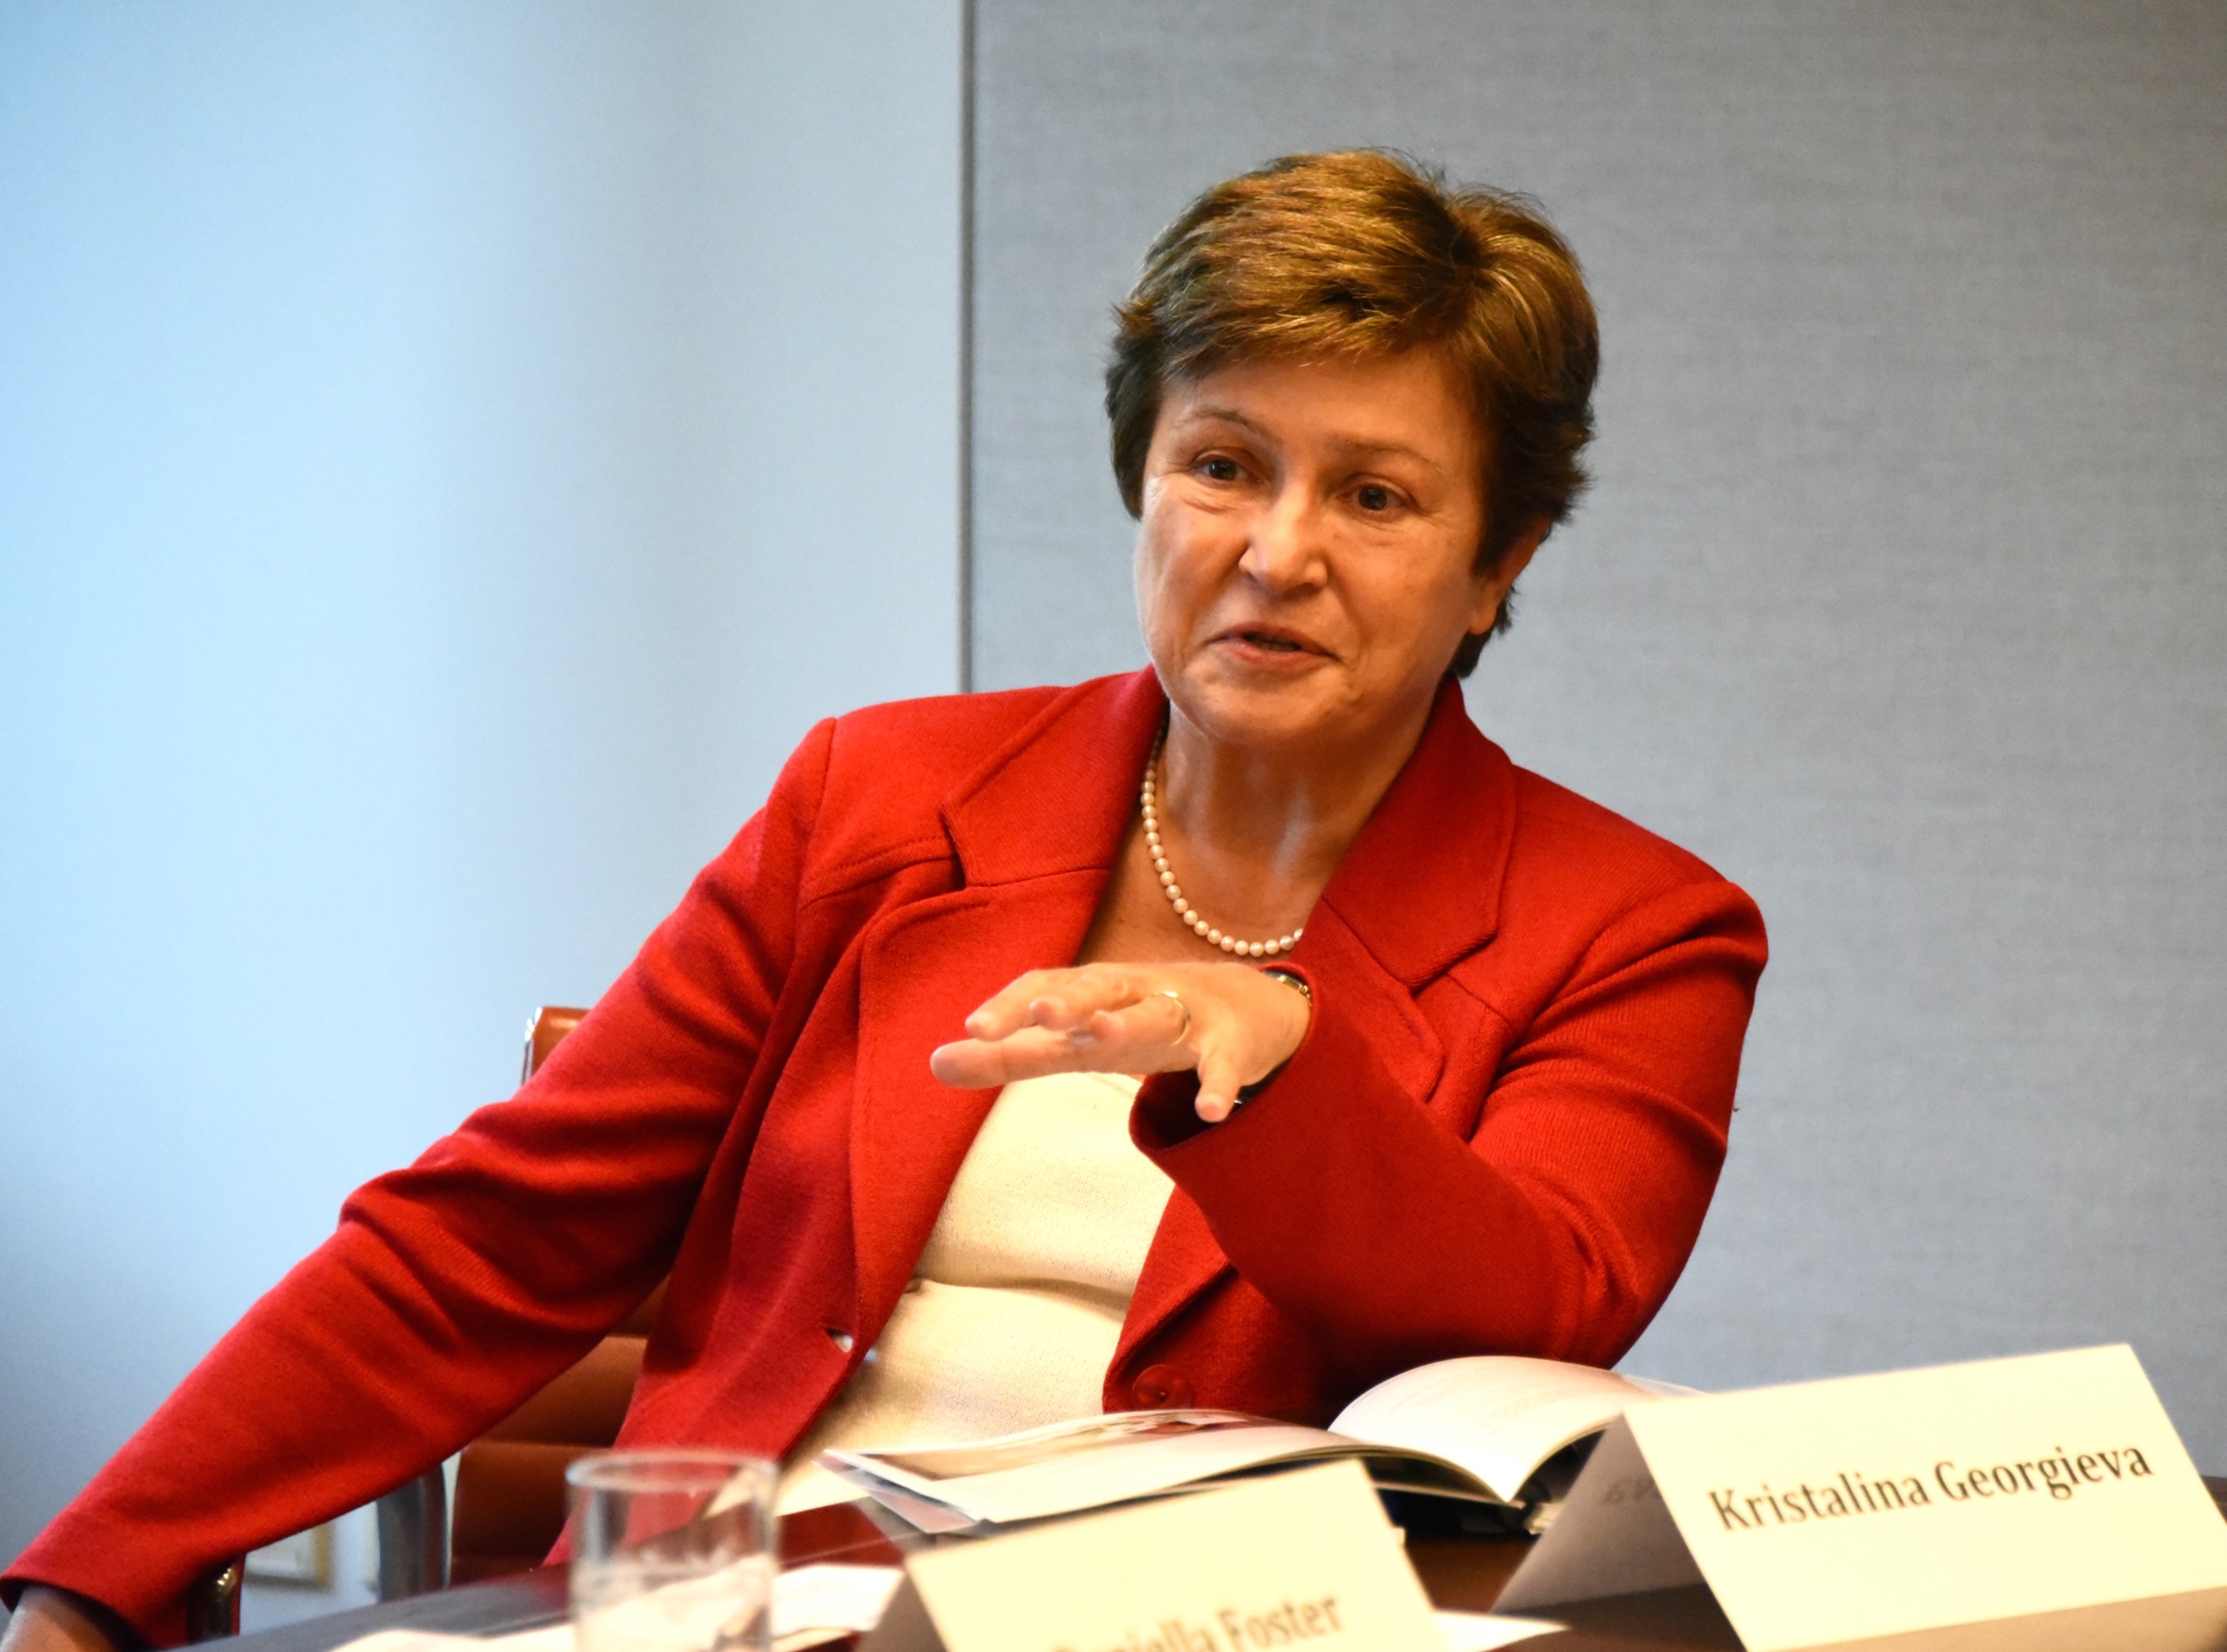 Kristalina Georgieva – Chief Executive Officer of the World Bank. Photo by Lana Wong/Education Commission. 